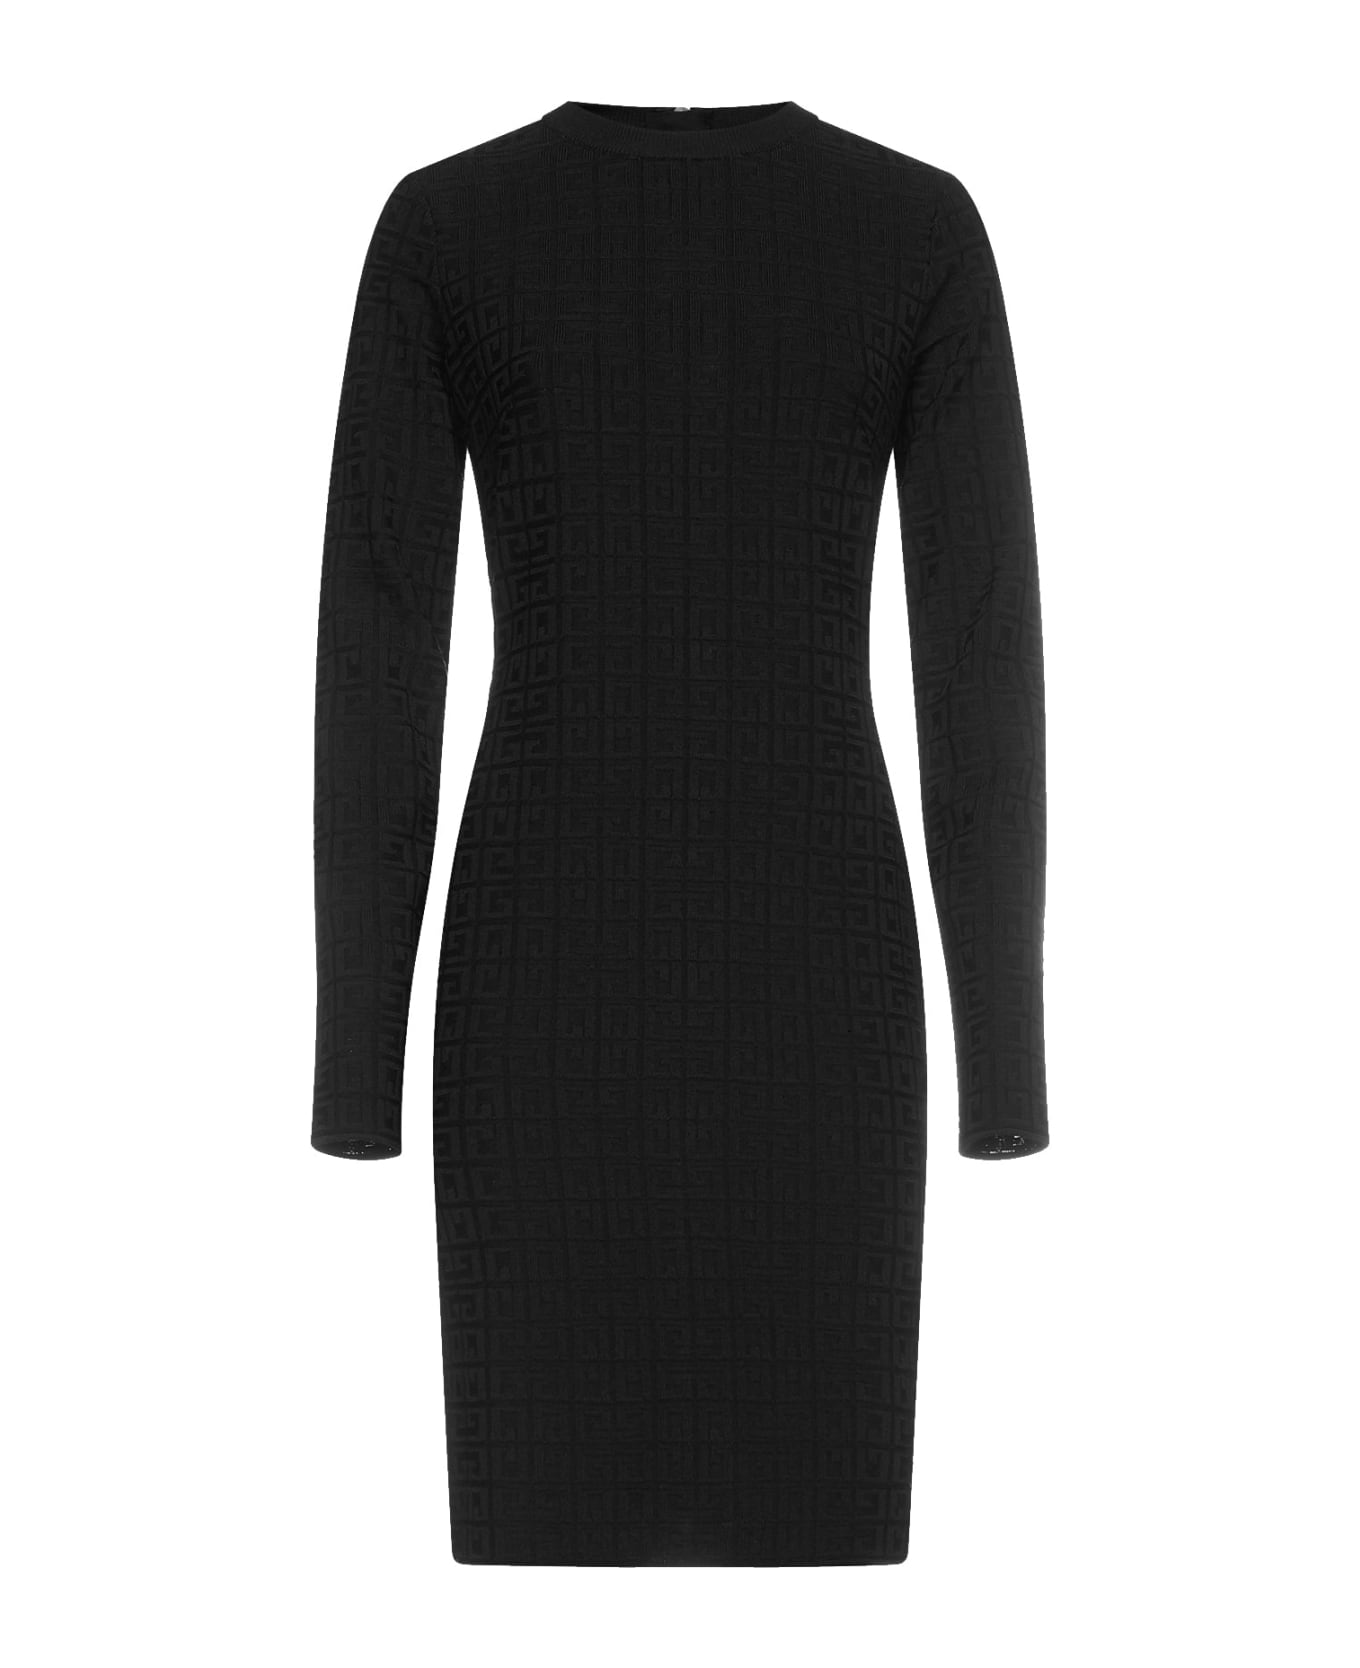 Givenchy Jacquard Dress - Black